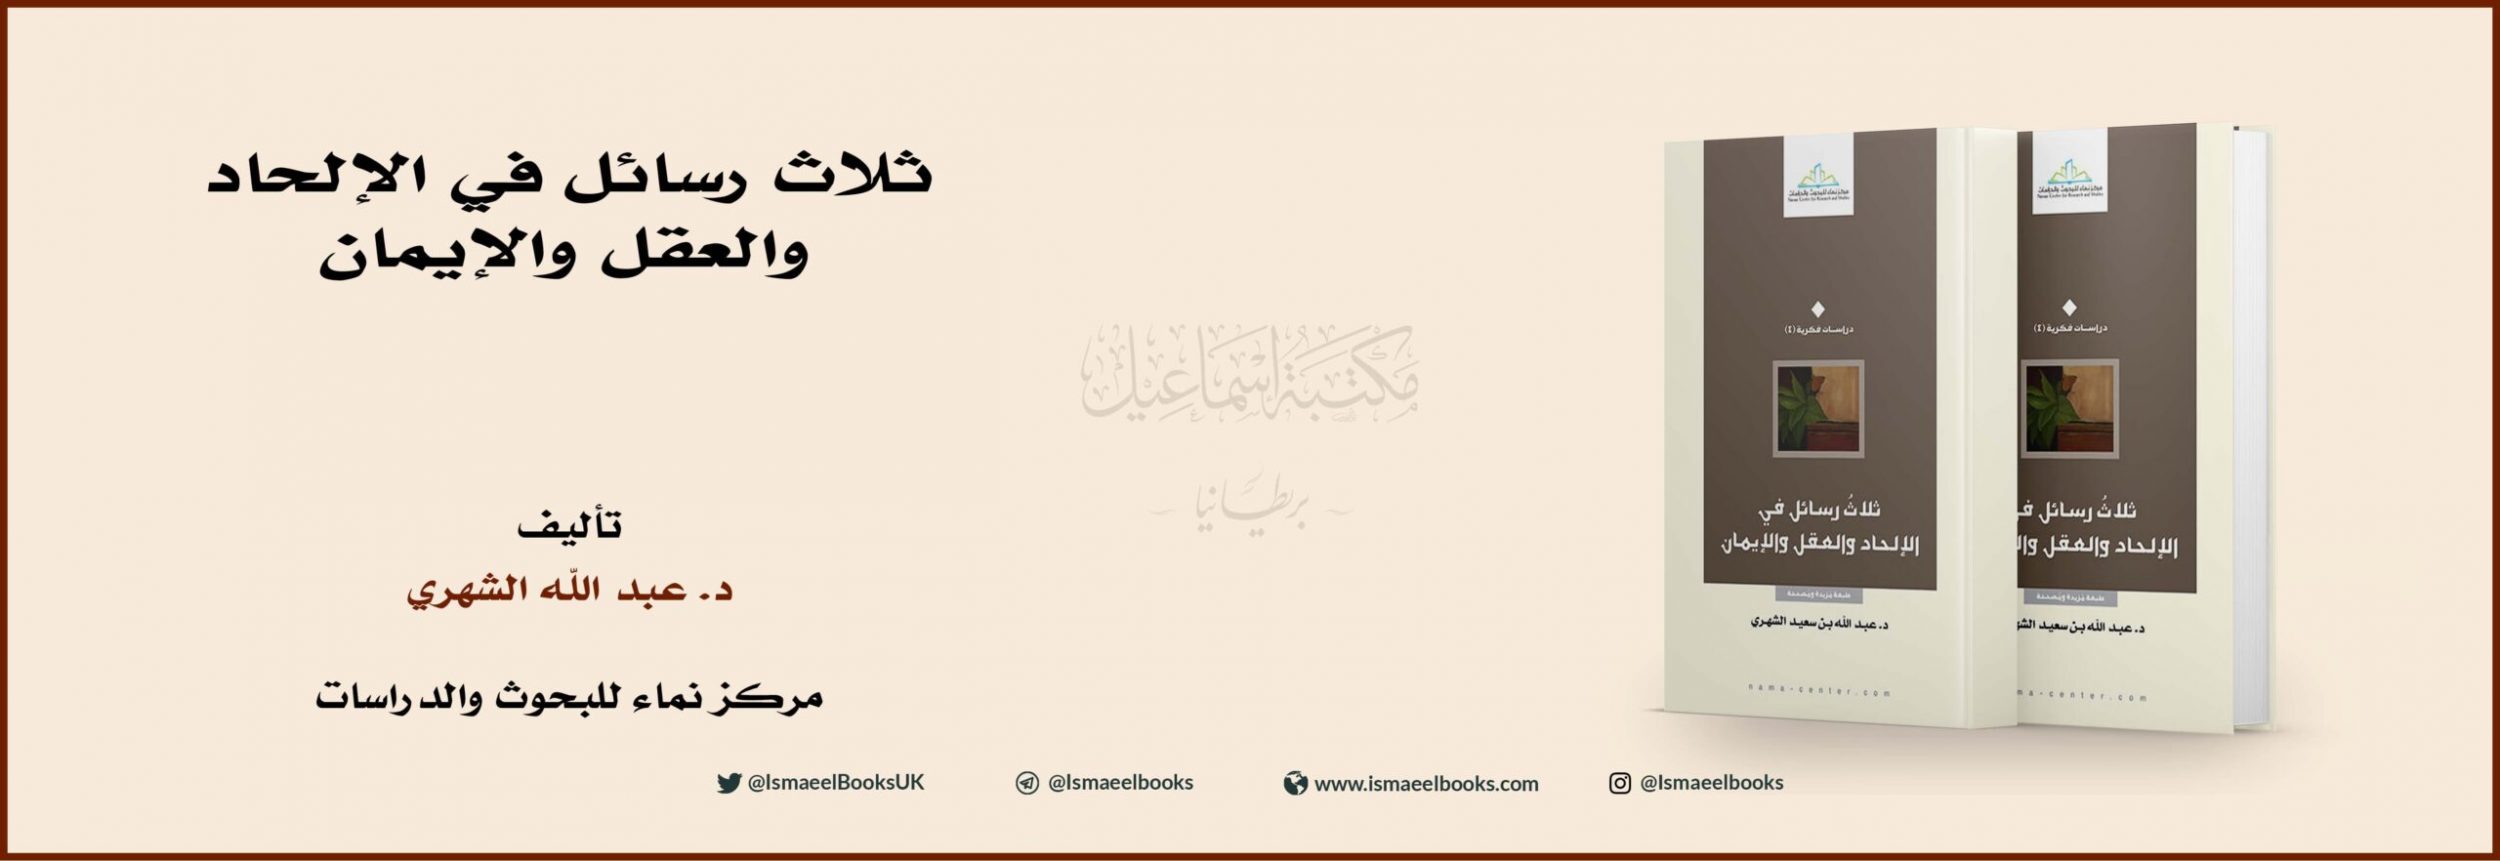 book banner-arabic